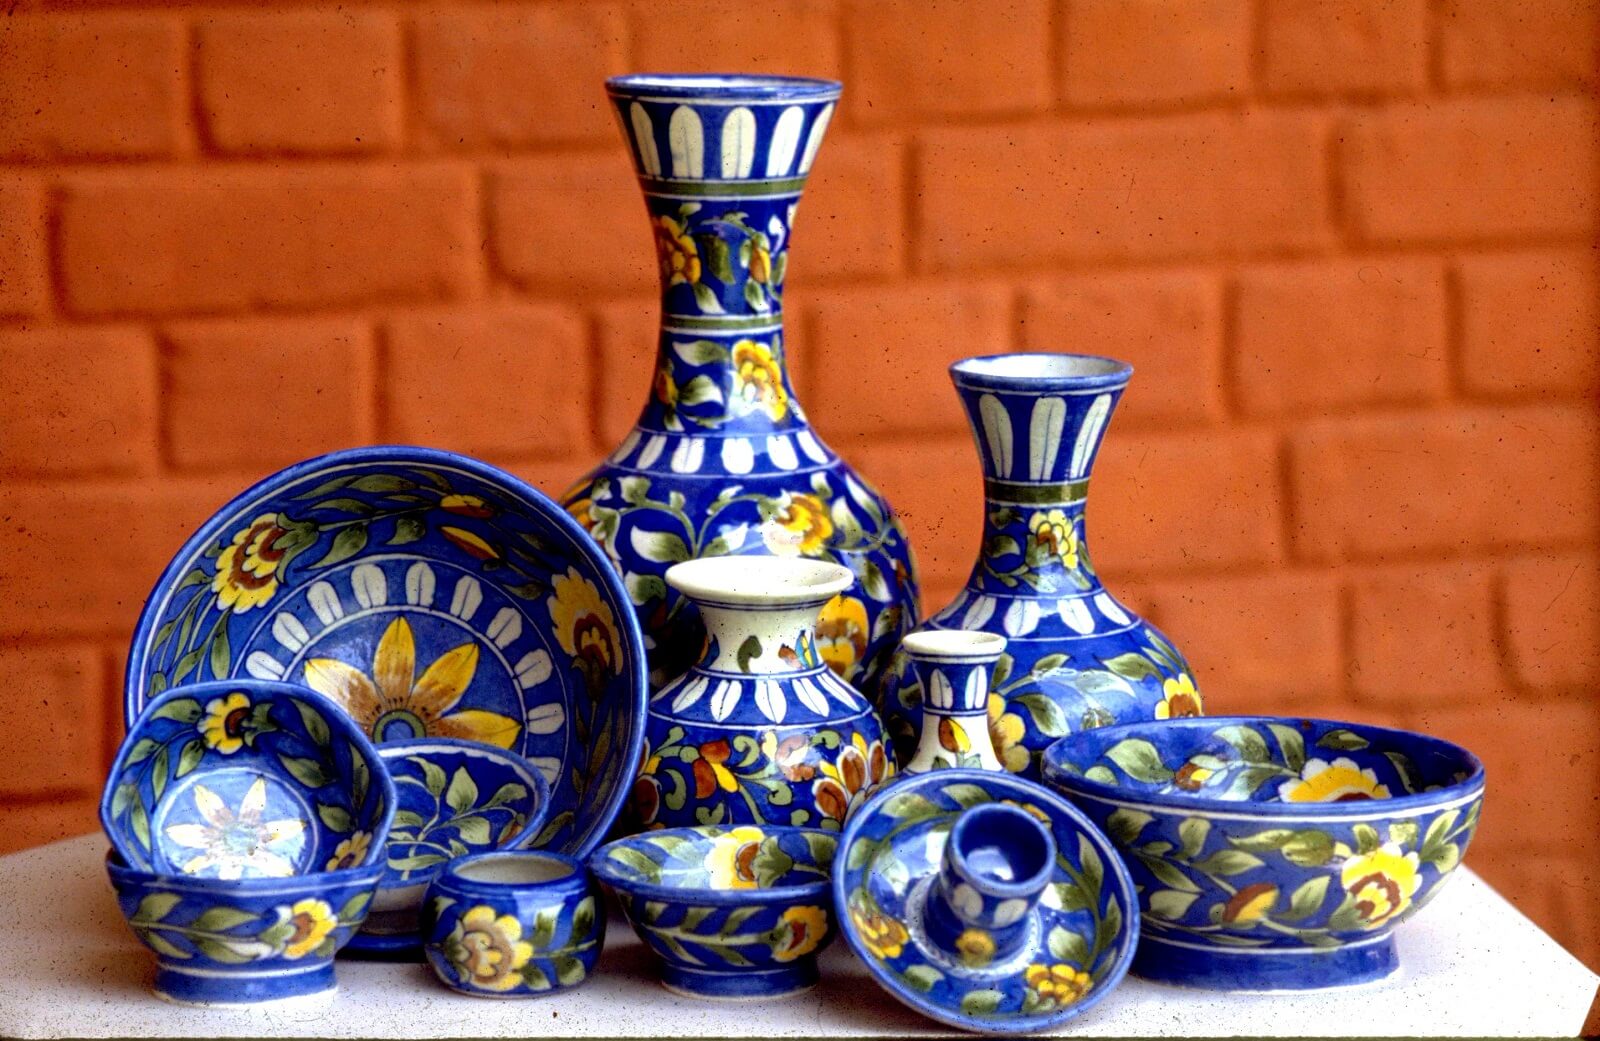 Blue Pottery, Jaipur